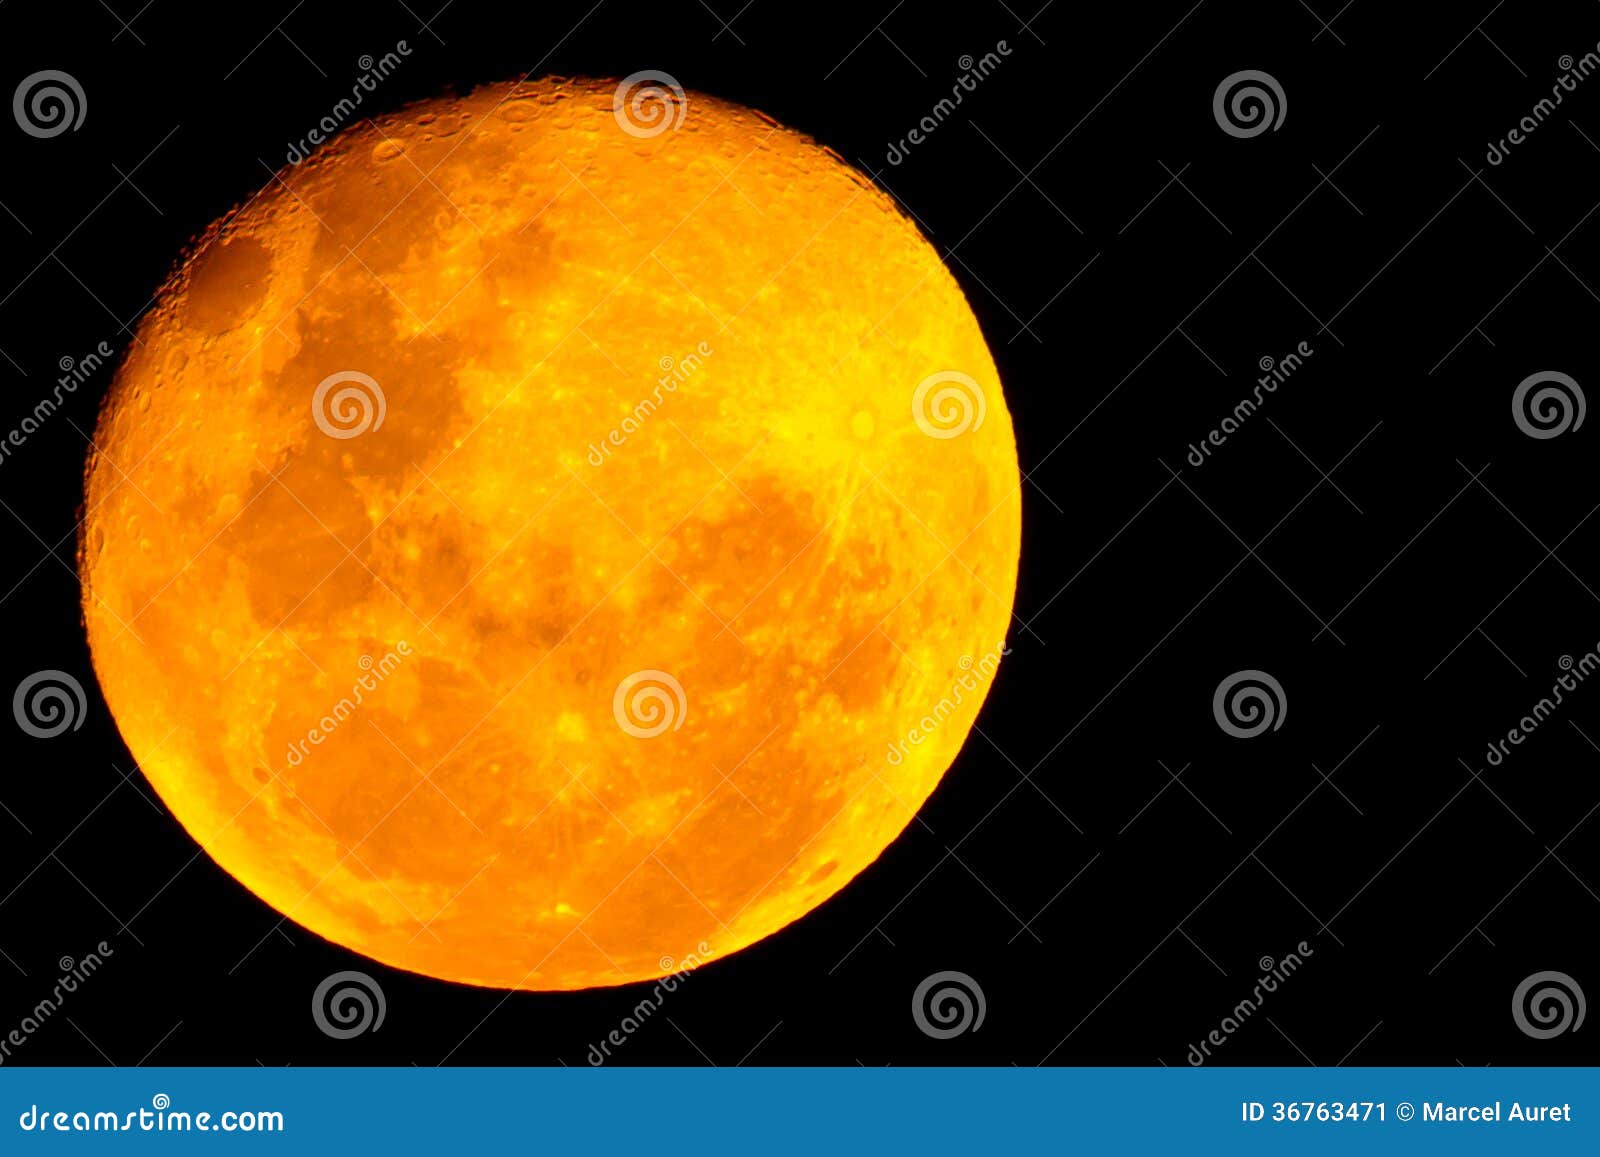 Lunar eclipse stock image. Image of lunar, textures, moon - 36763471